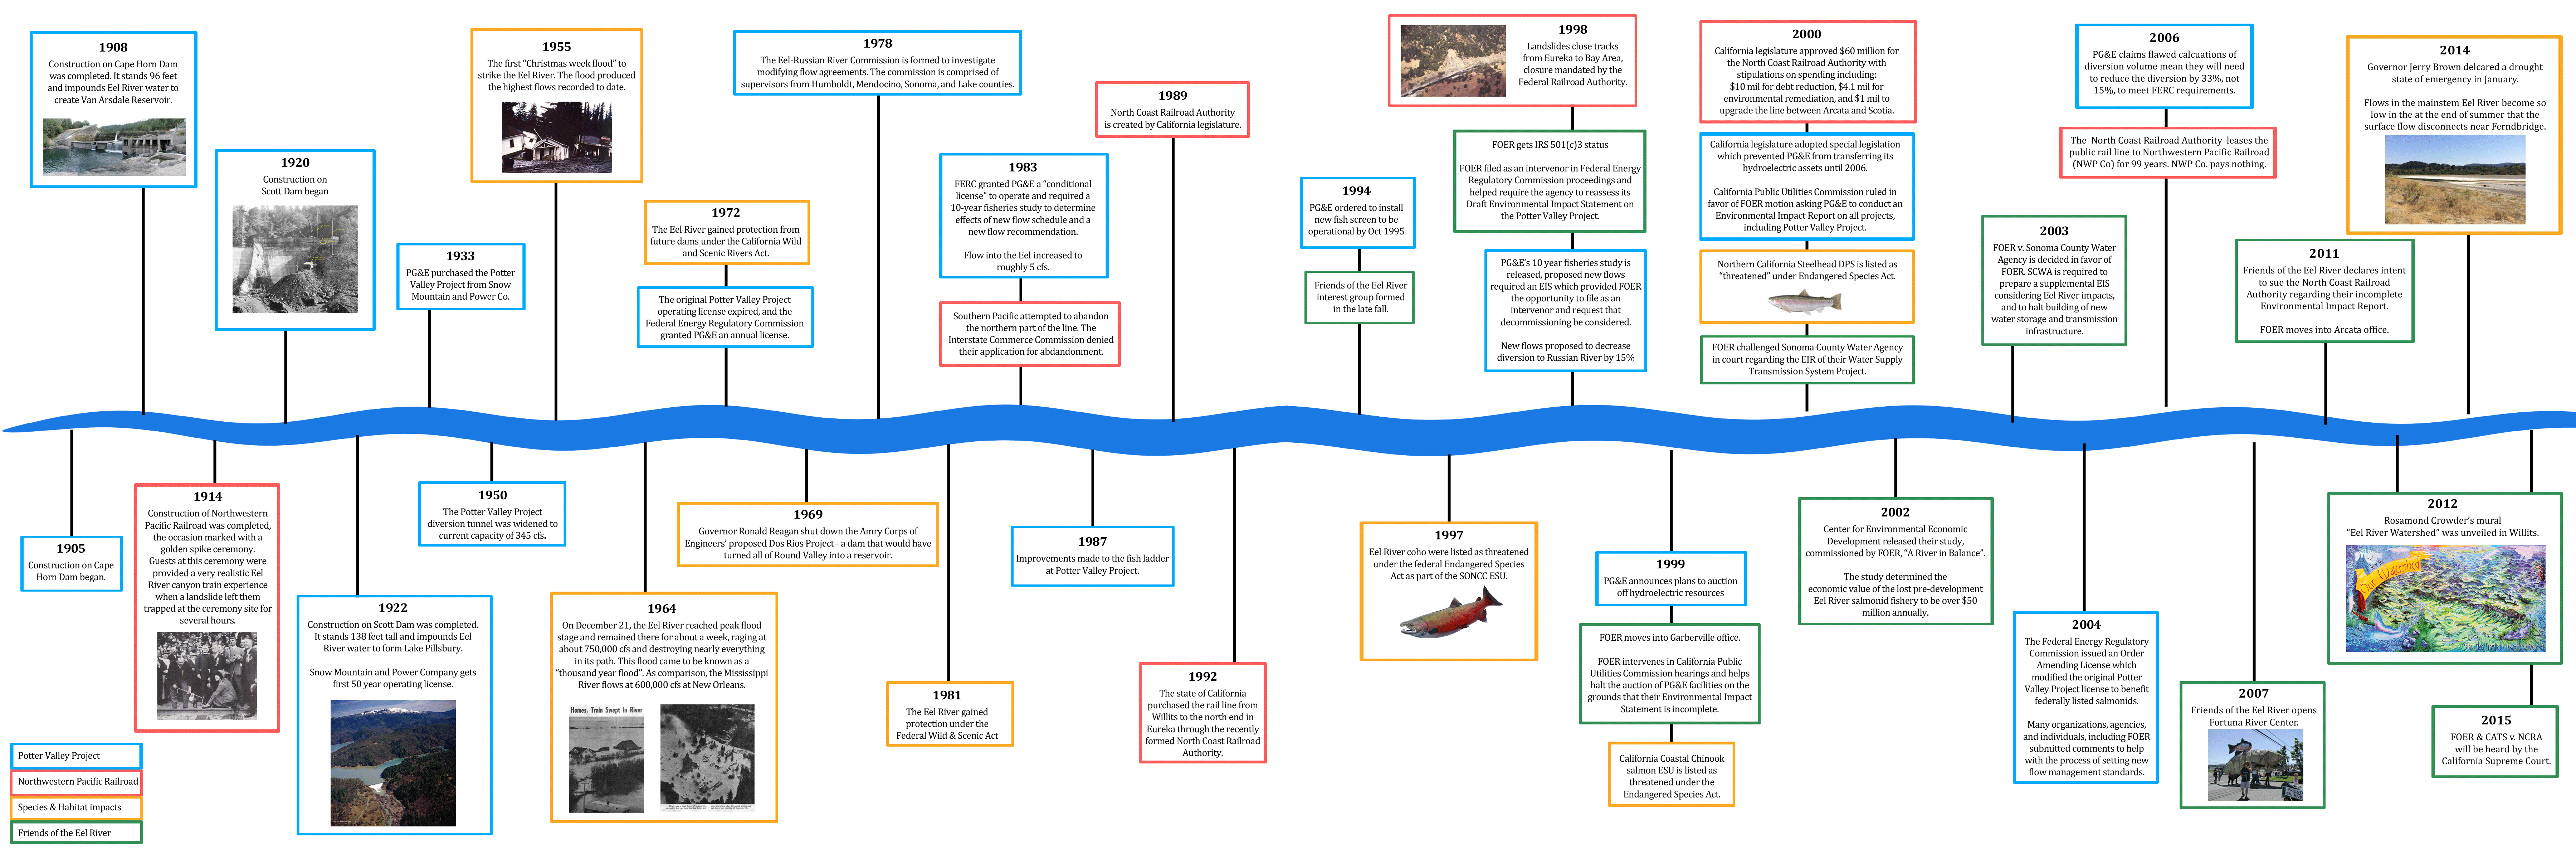 Brief timeline of Eel River history. Click to enlarge.